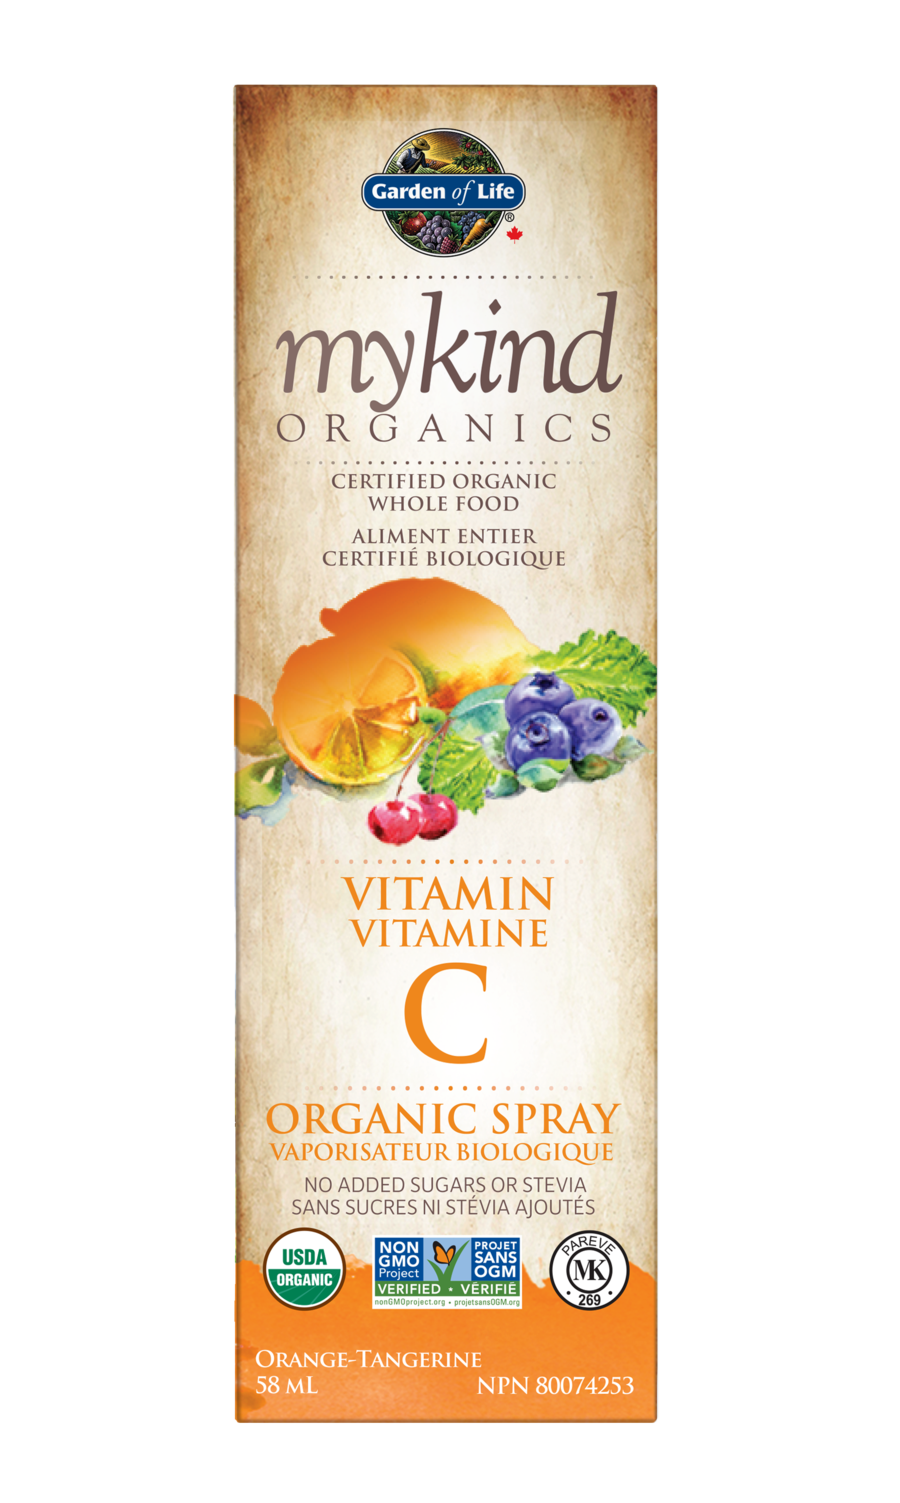 Garden of Life MyKind Organics Vegan Organic Vitamin C Spray Orange-Tangerine 58ml